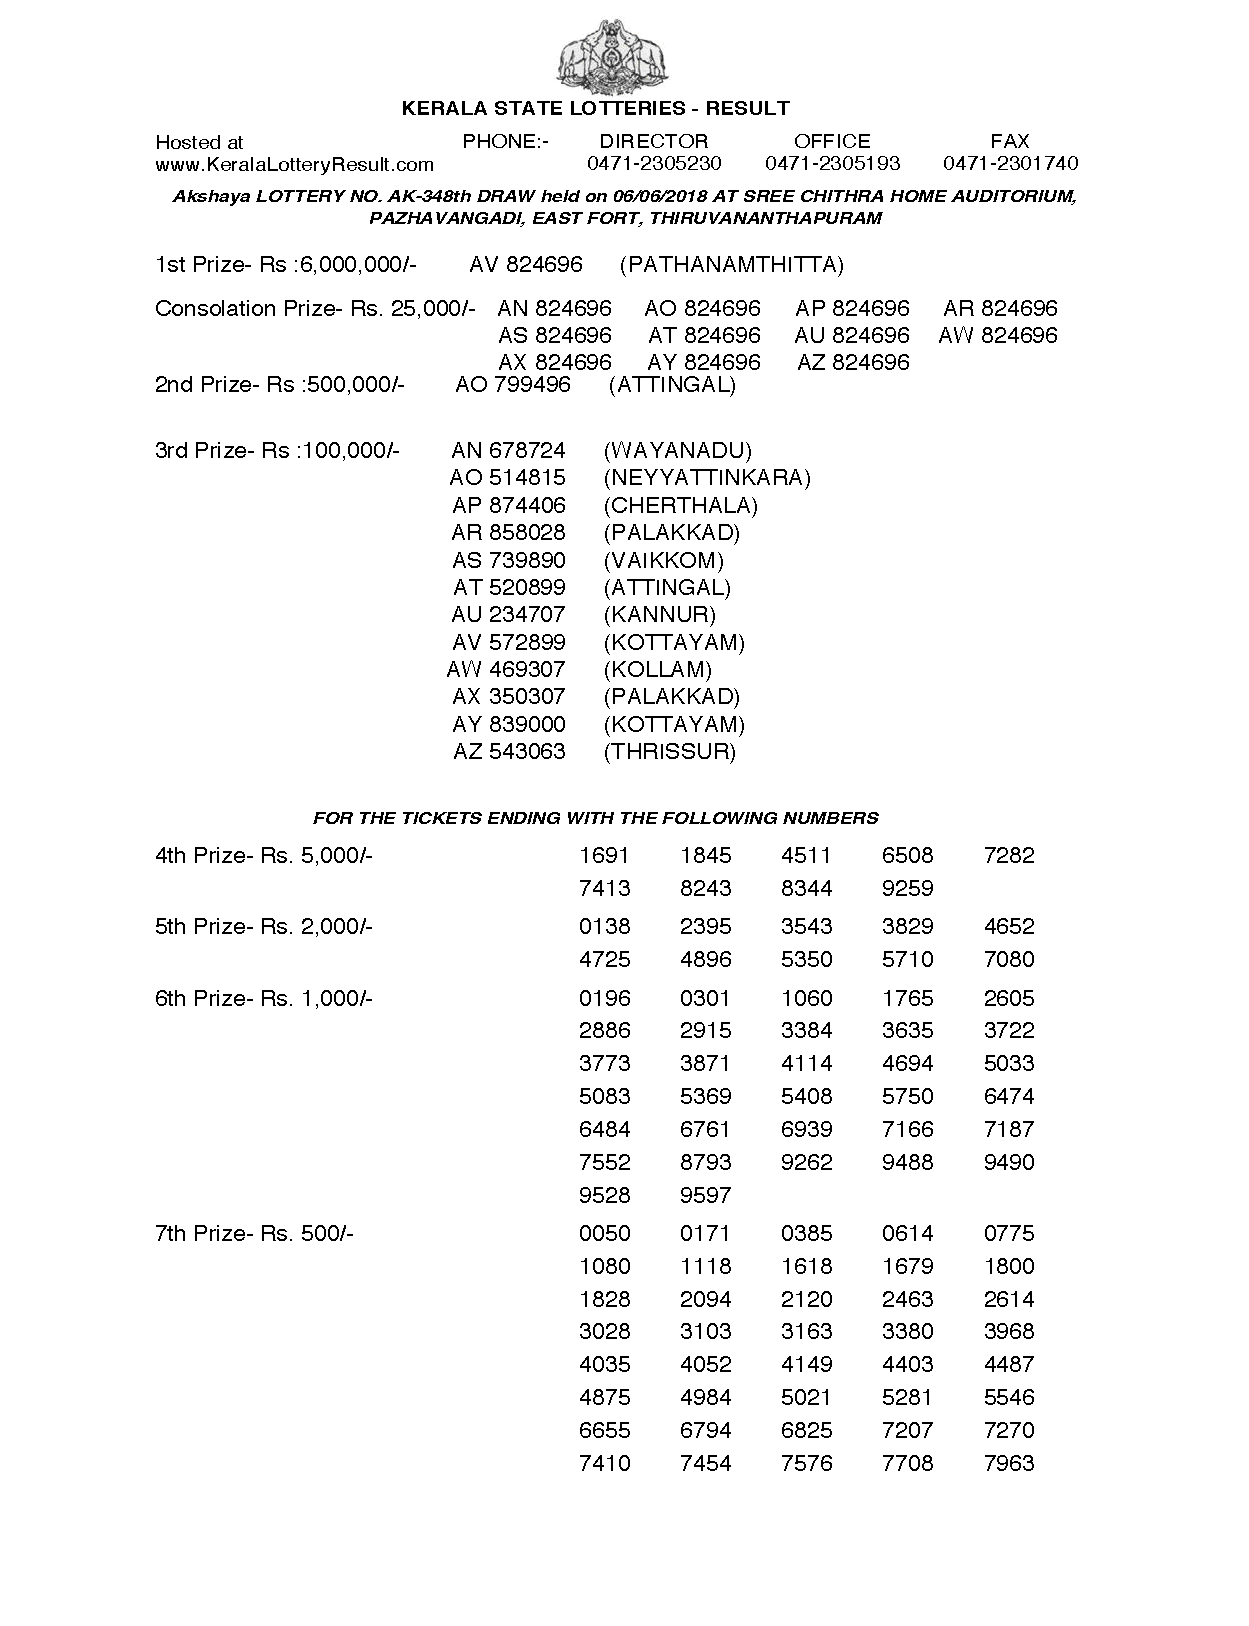 Akshaya AK348 Kerala Lottery Results Screenshot: Page 1